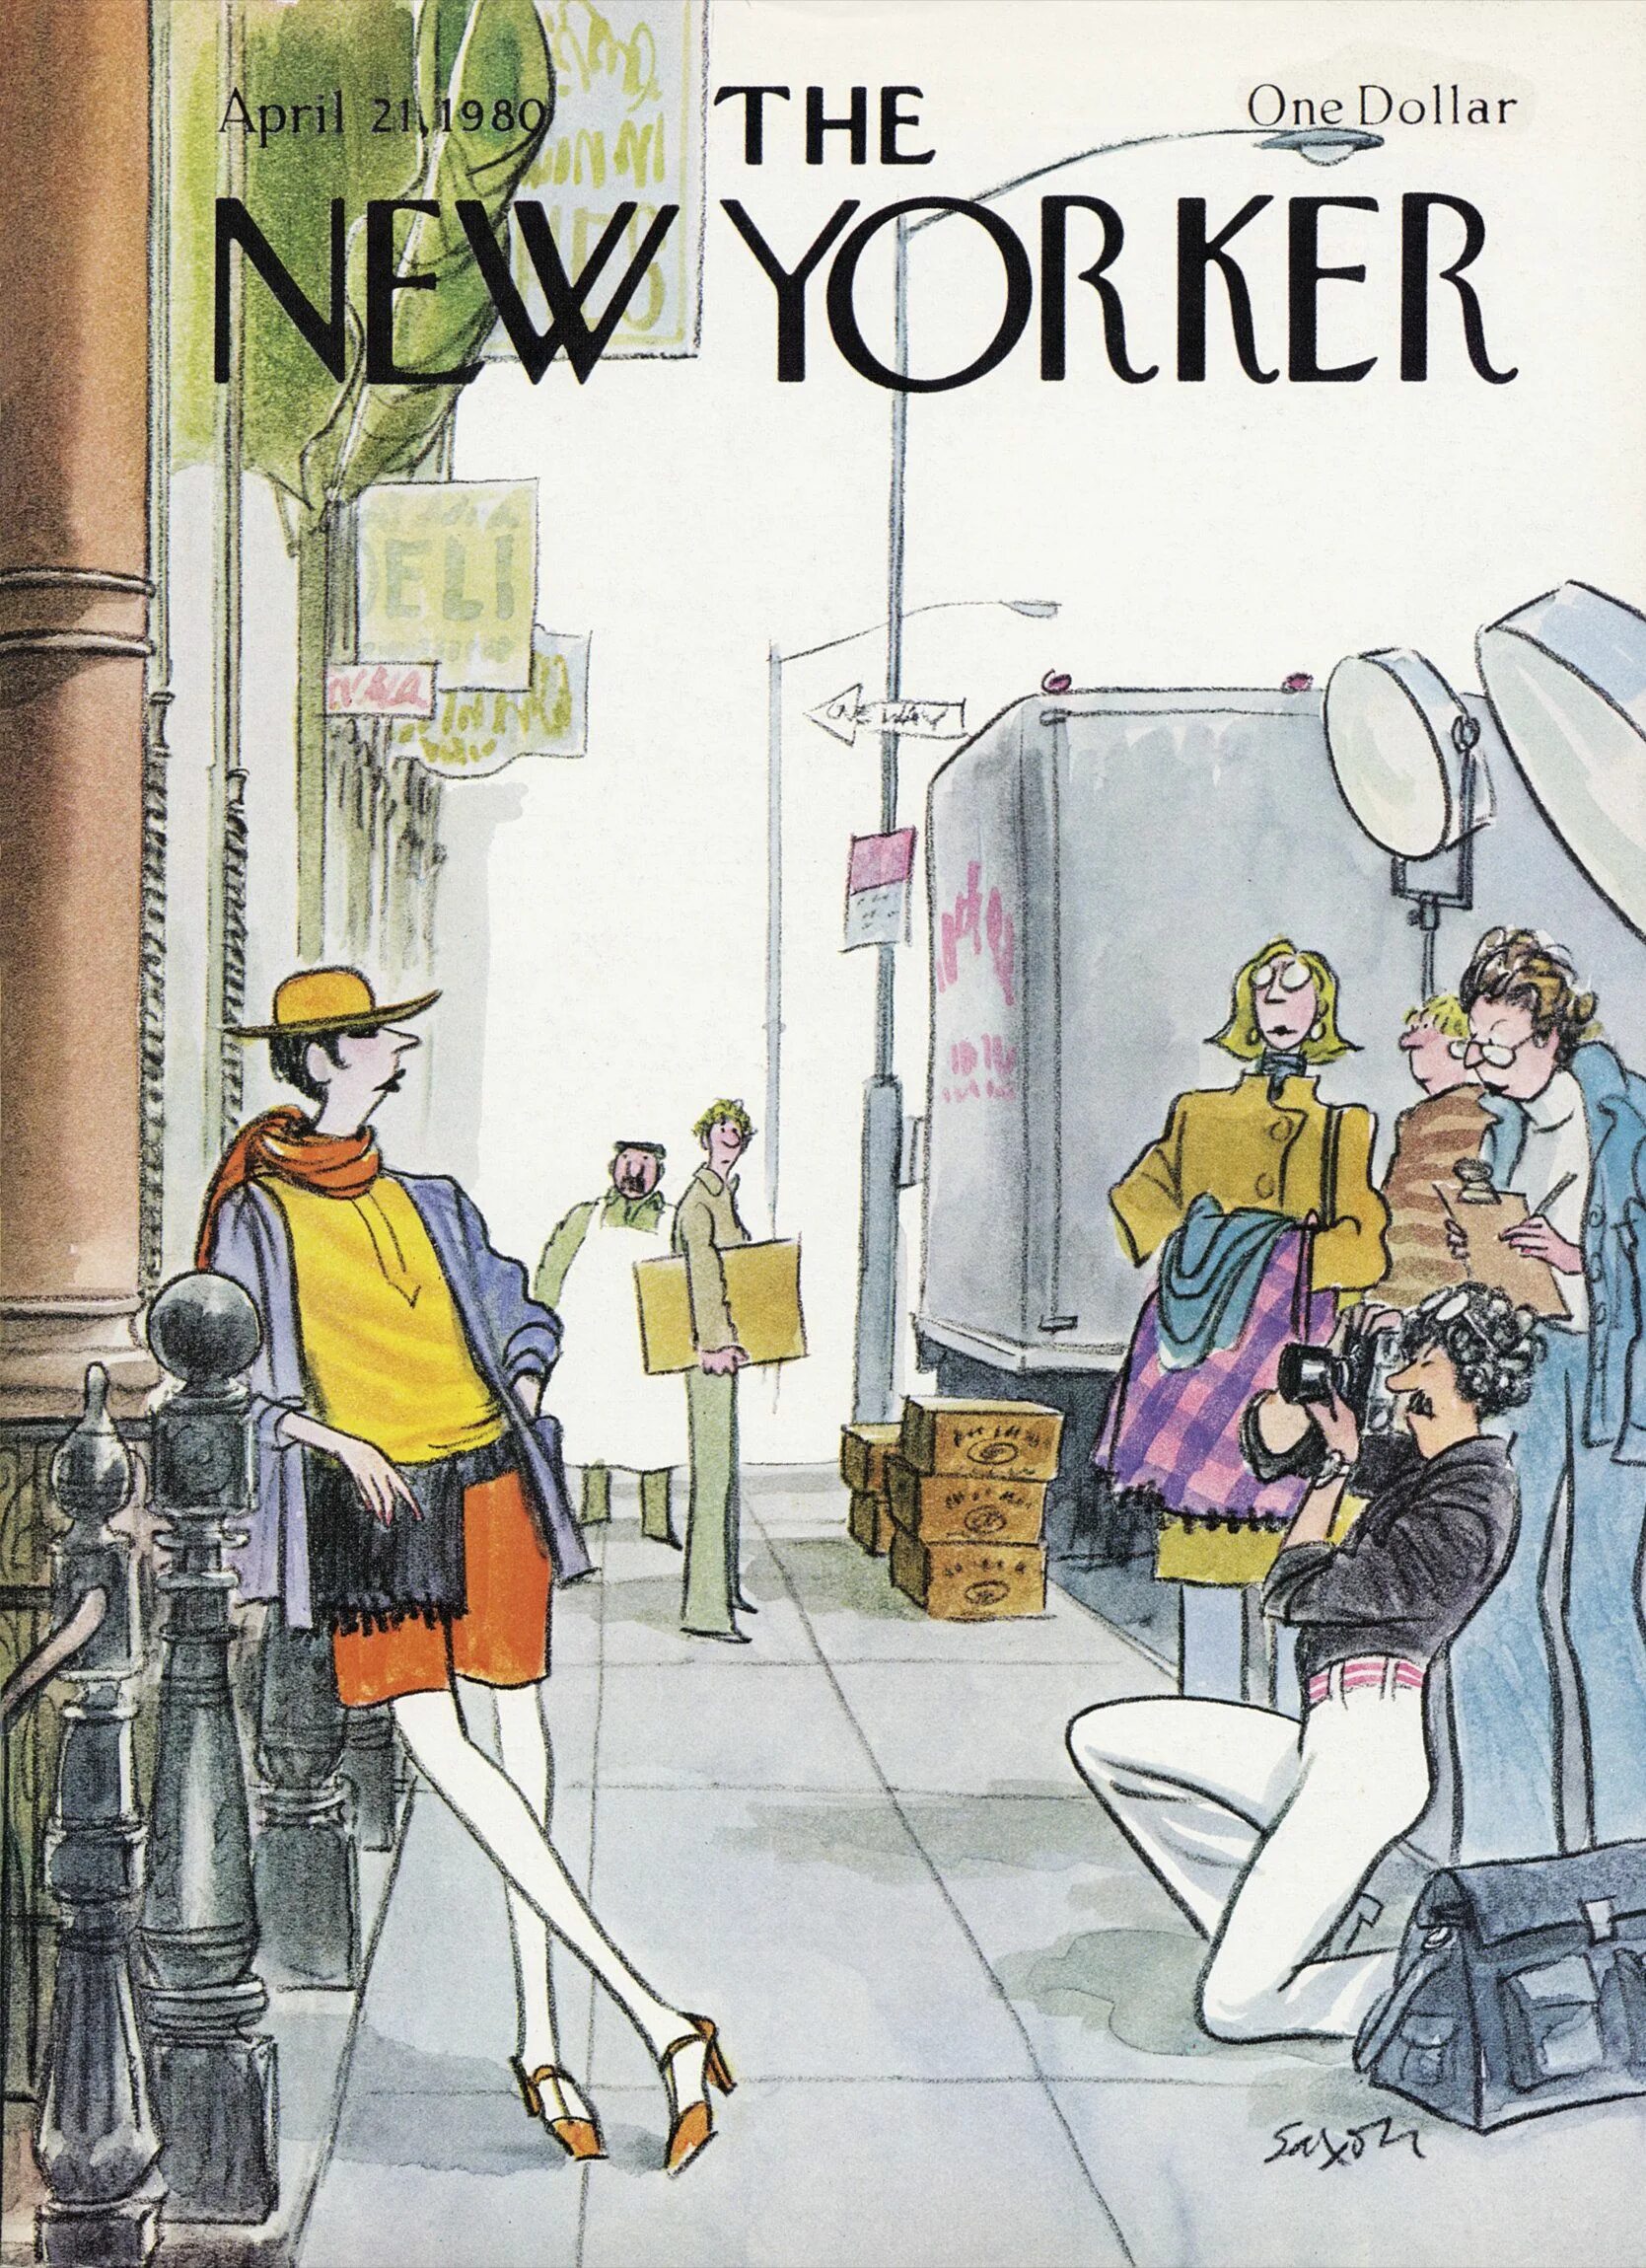 Обложки журнал Нью-йоркер Нью-йоркер. The New Yorker Magazine обложки. Винтажные обложки New Yorker. The New Yorker 1980. Журнал new yorker